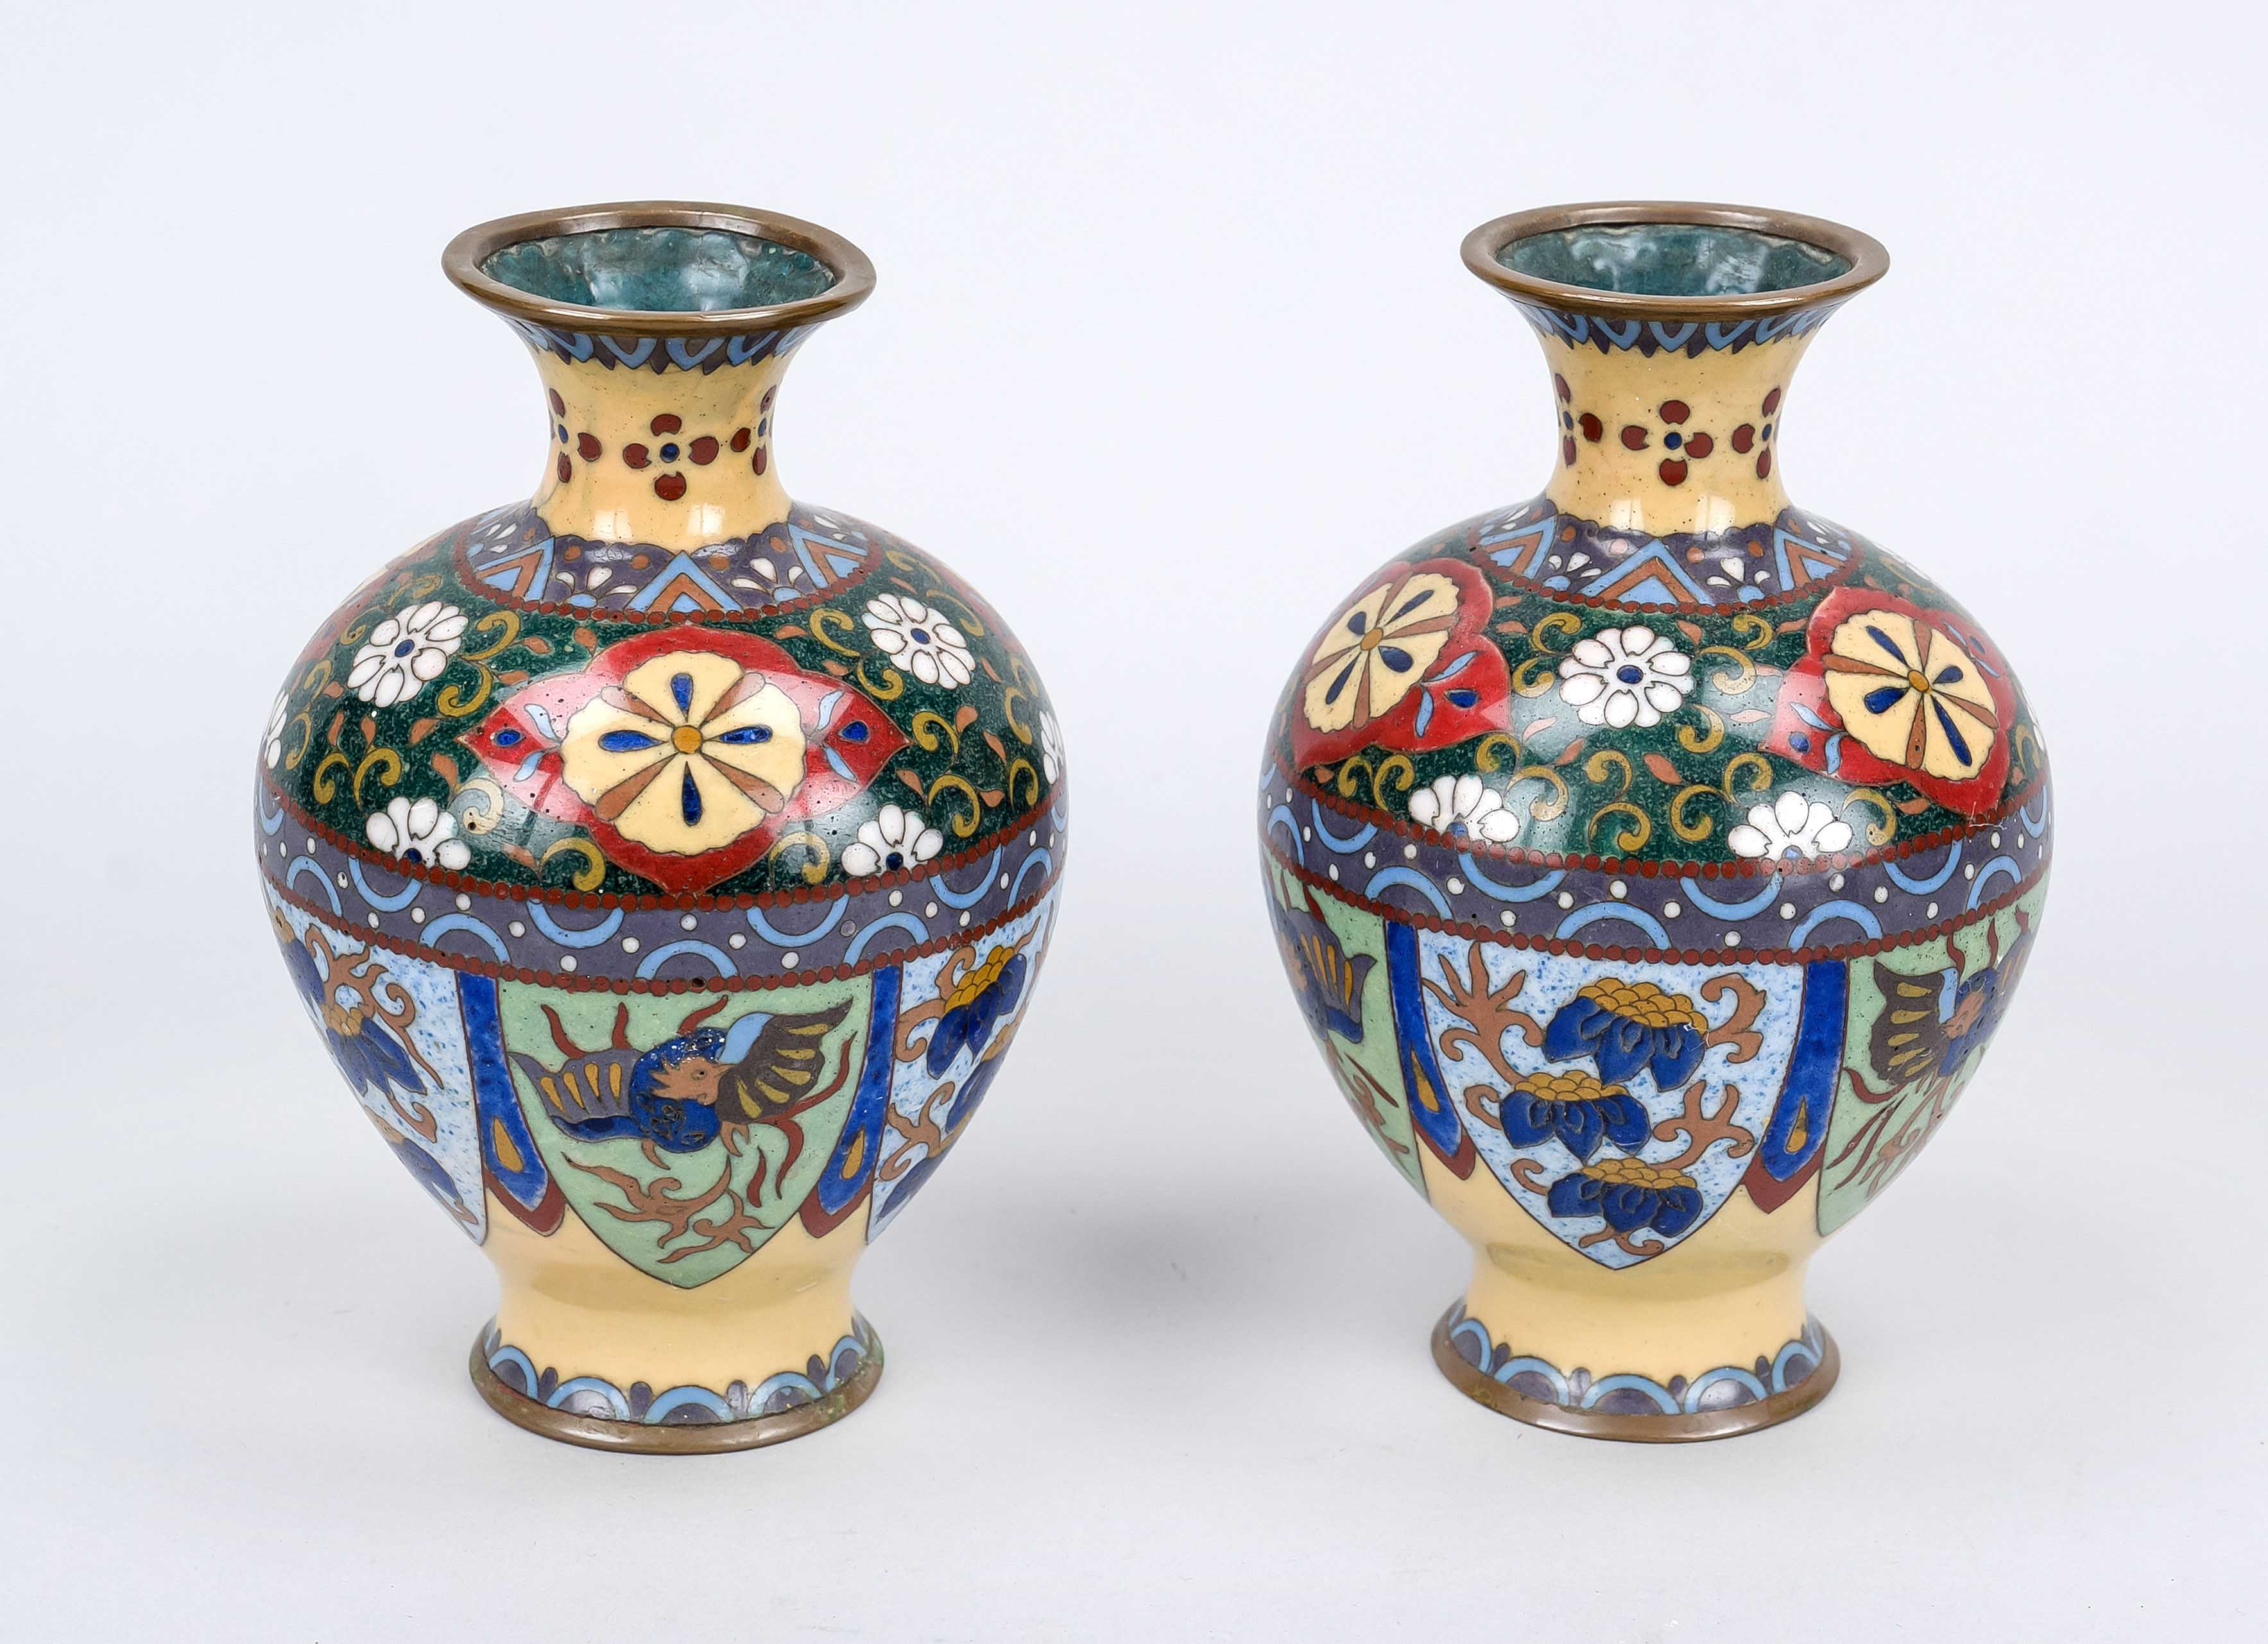 A pair of cloisonné vases, Japan, c. 1900 (Meiji). rubbed & slightly chipped, h. 15 cm